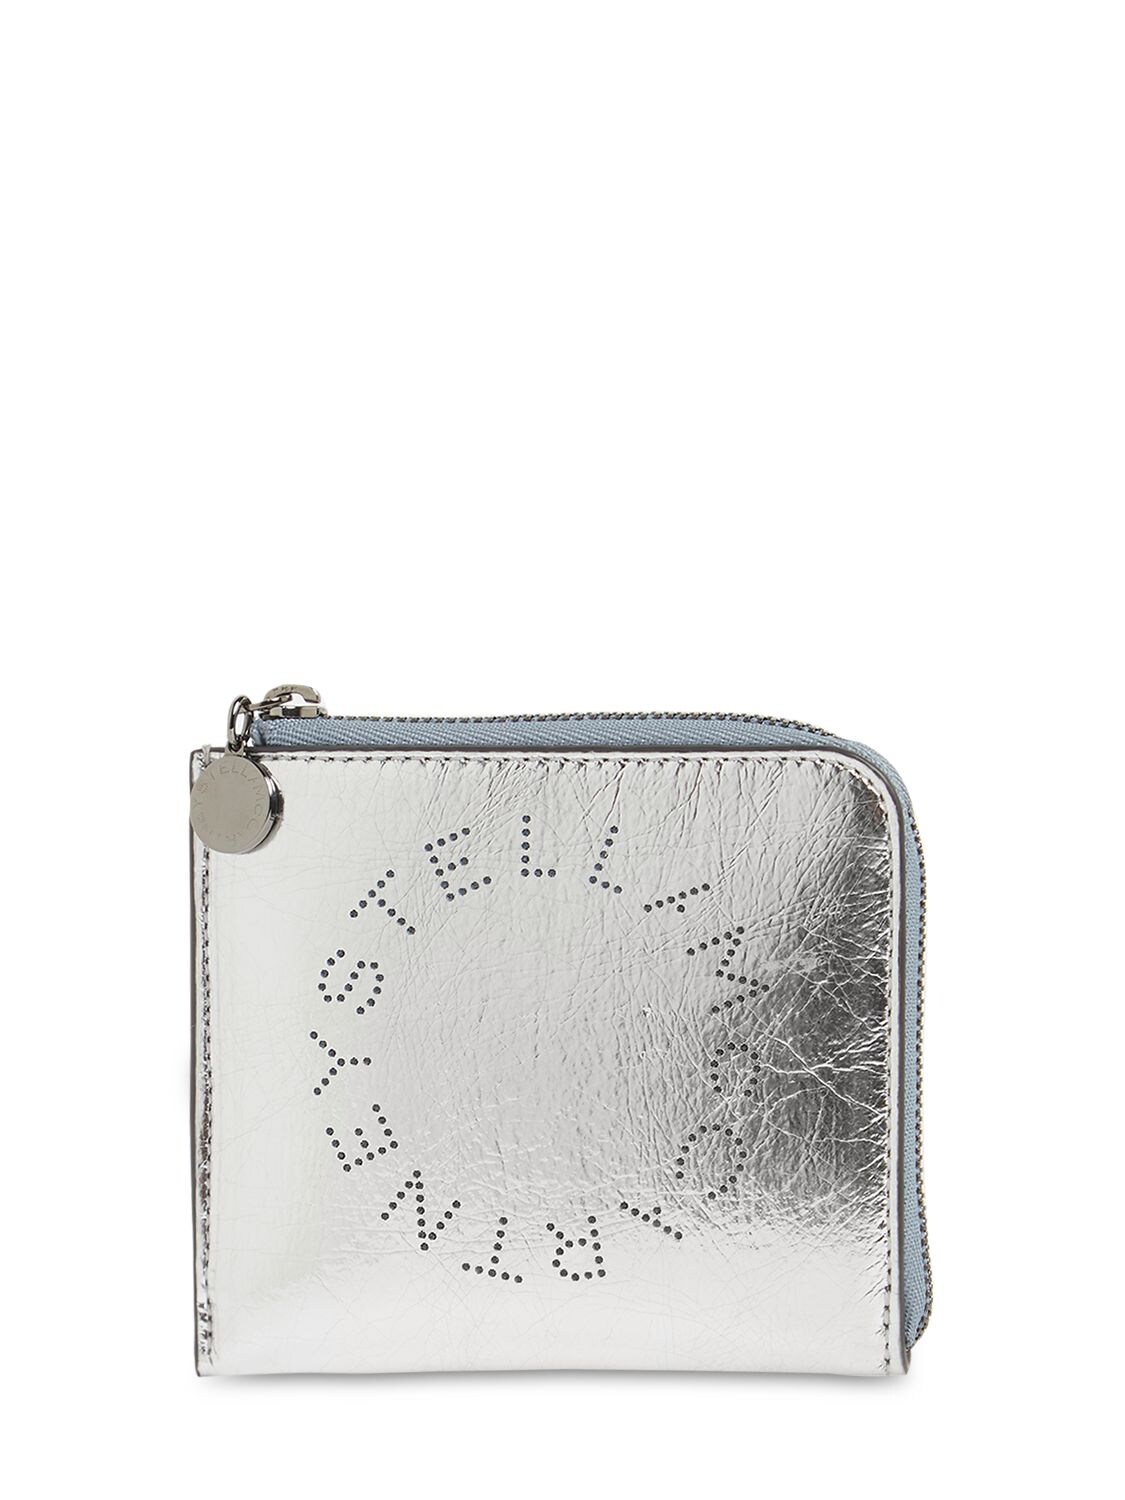 STELLA MCCARTNEY 金属色仿皮钱包,75IMAX017-ODEWMQ2